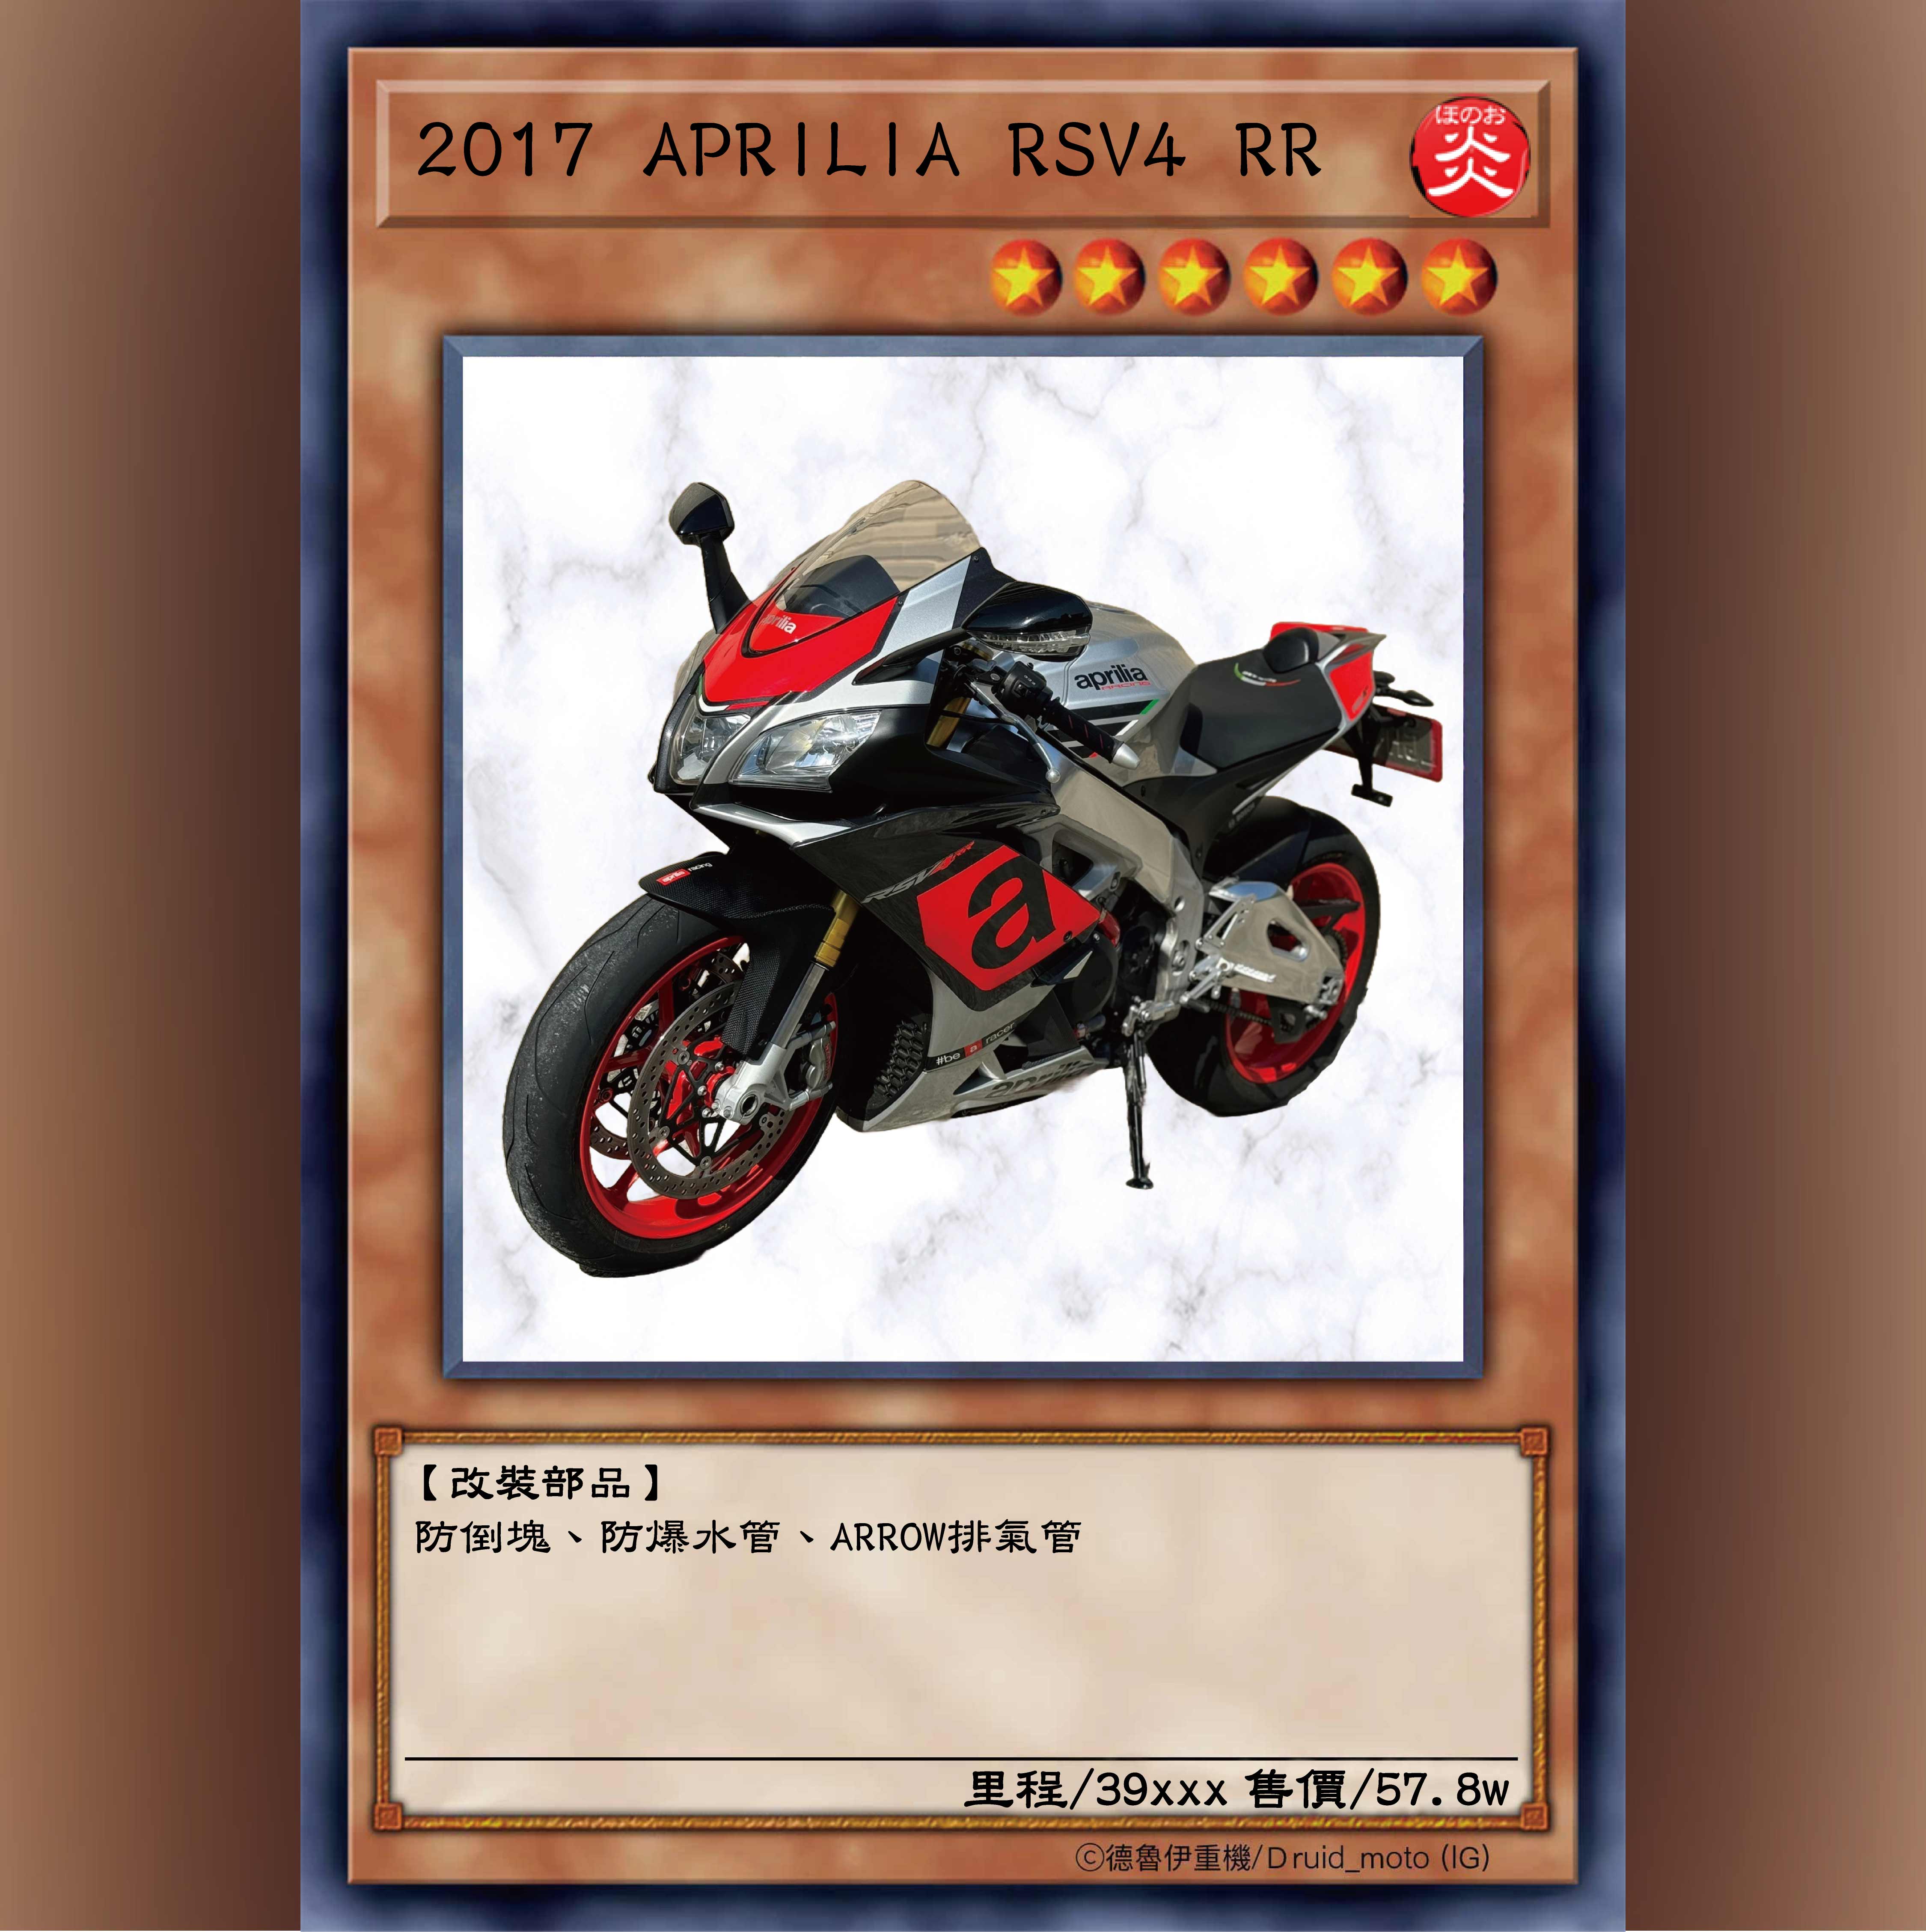 【德魯伊重機】APRILIA RSV4 - 「Webike-摩托車市」 APRILIA RSV4 RR